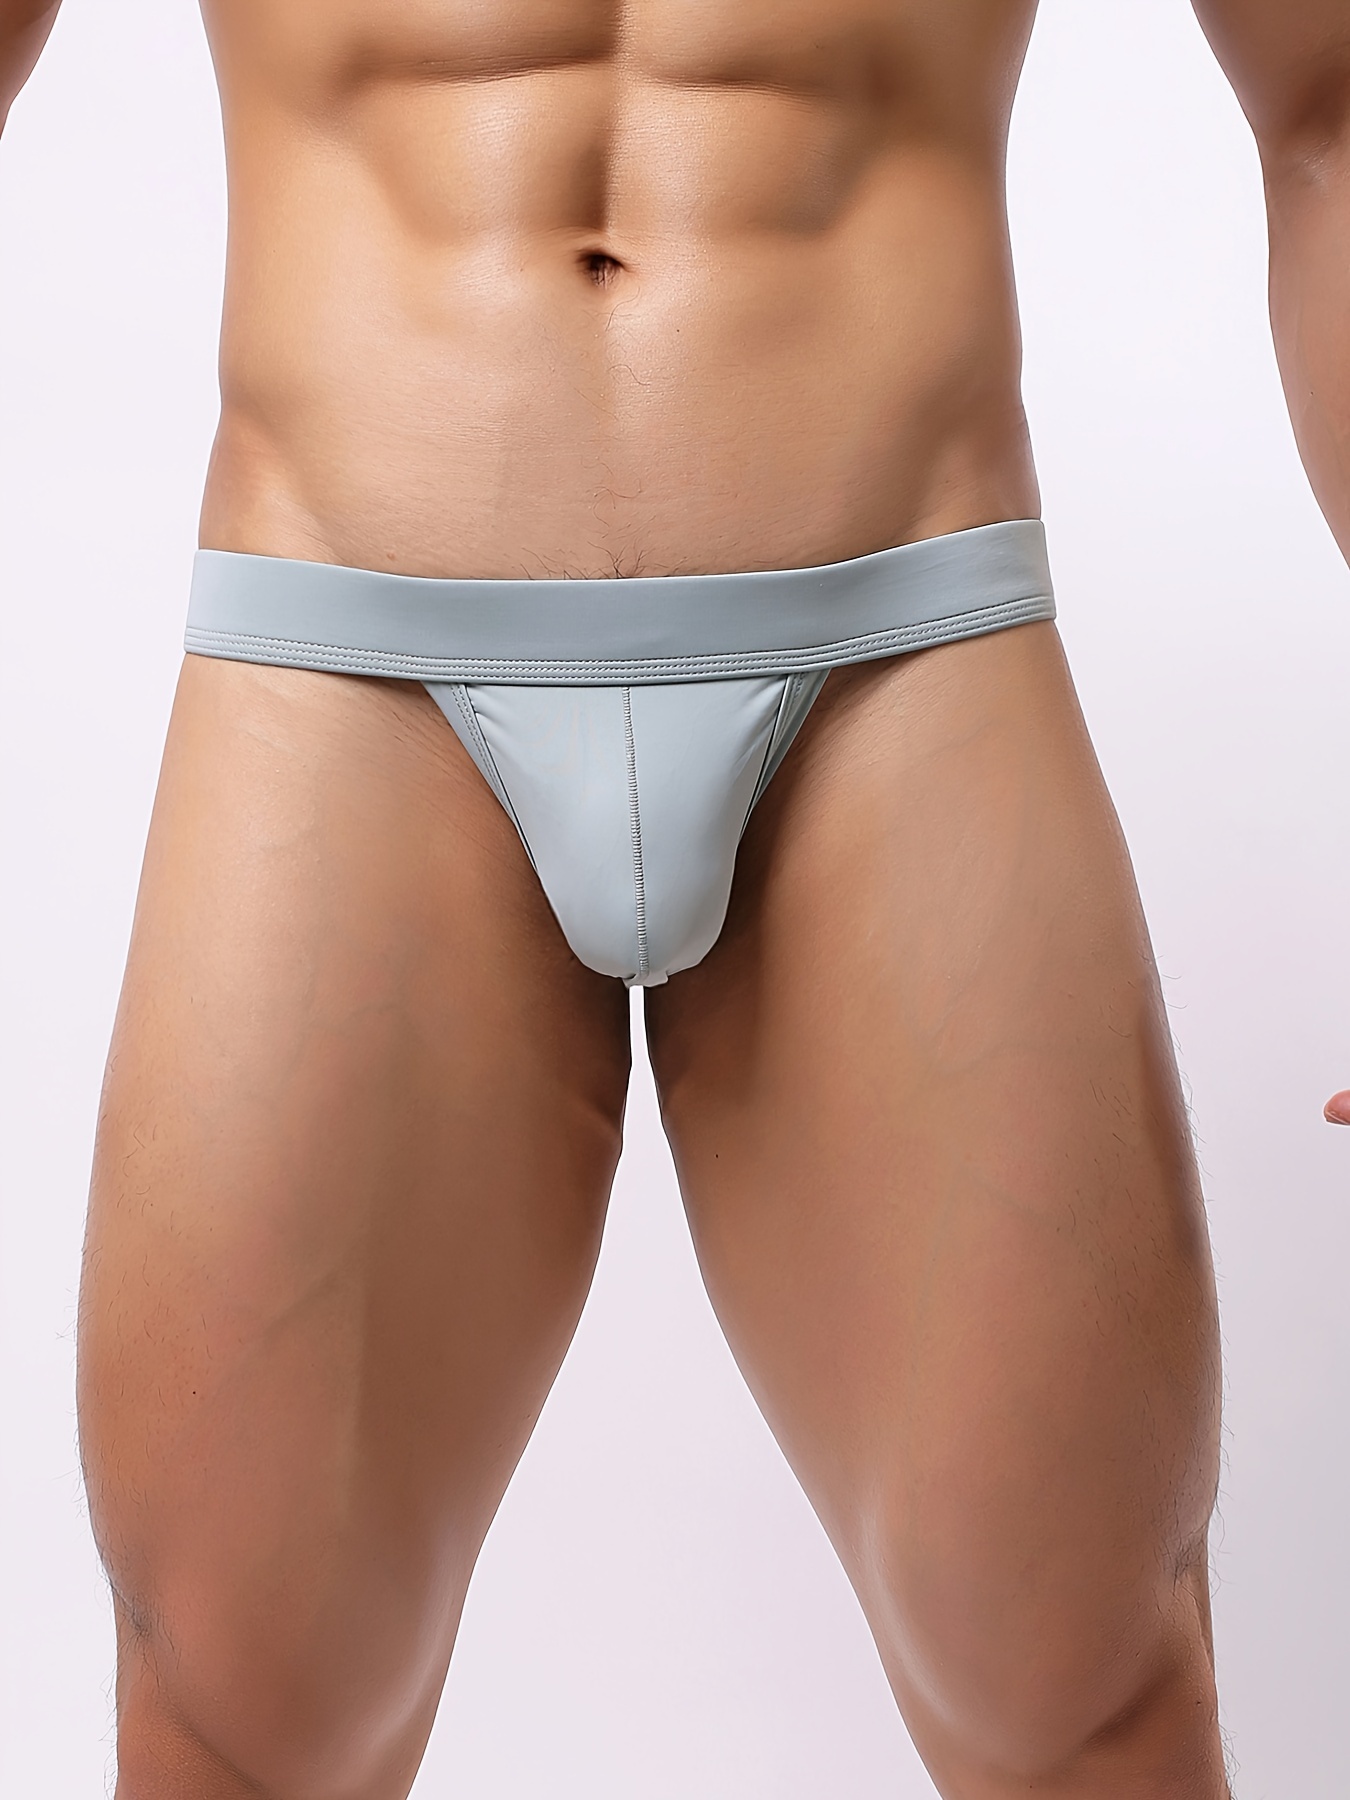 GO2SEXY Men's Mesh See Through Thongs G-String T-Back Bikini